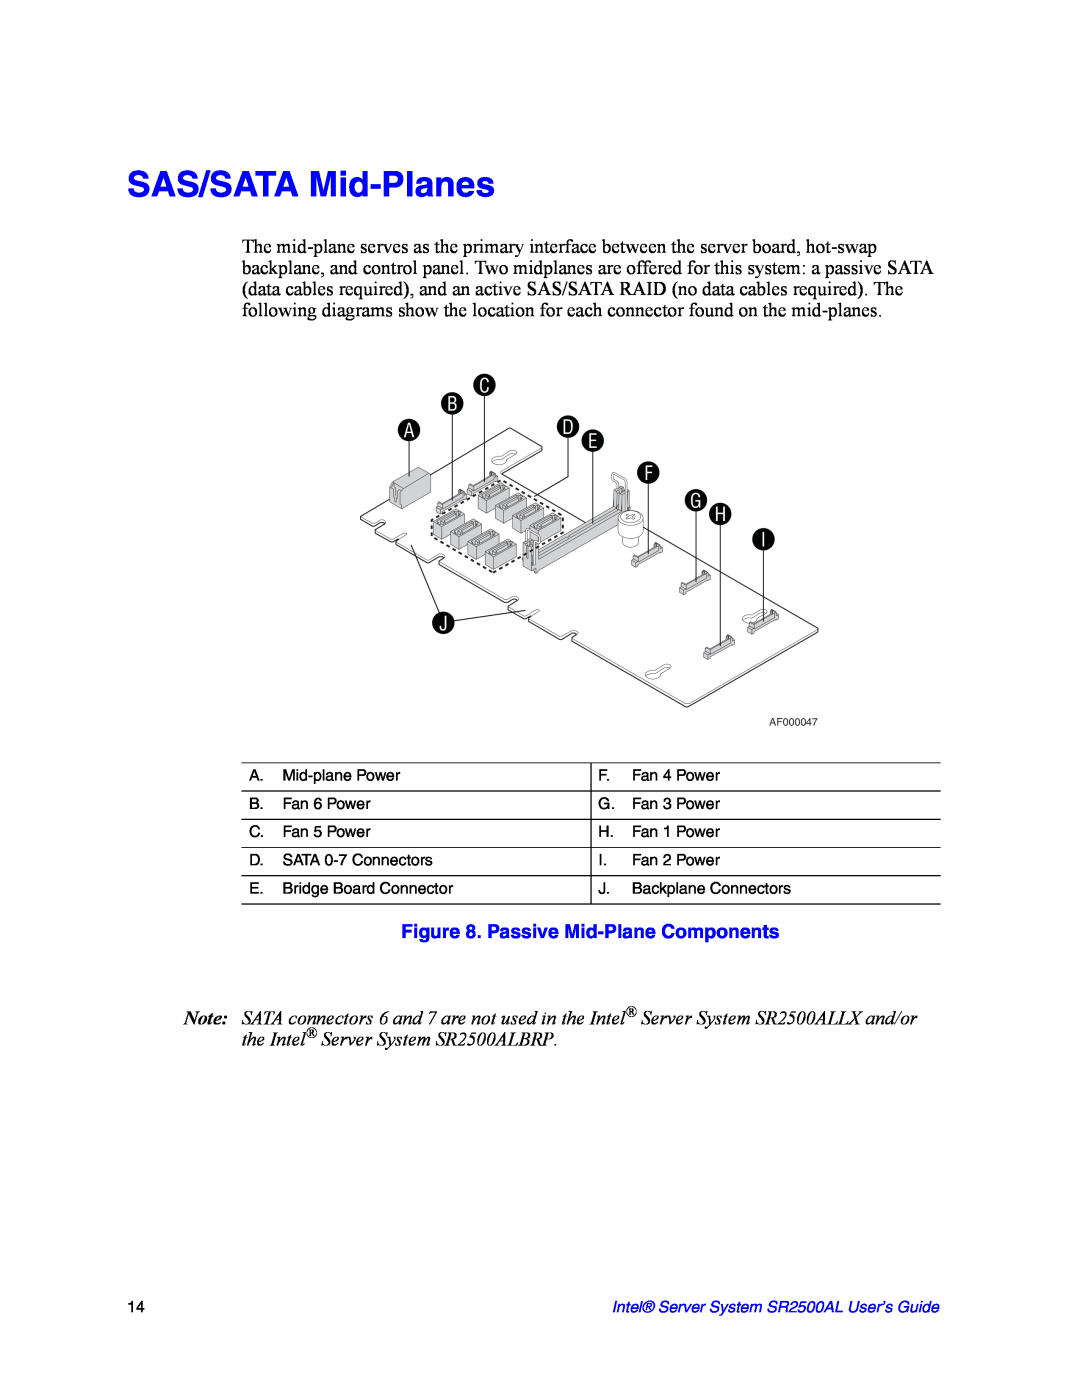 Intel SR2500AL manual SAS/SATA Mid-Planes, C B Ad E F G, Passive Mid-Plane Components 